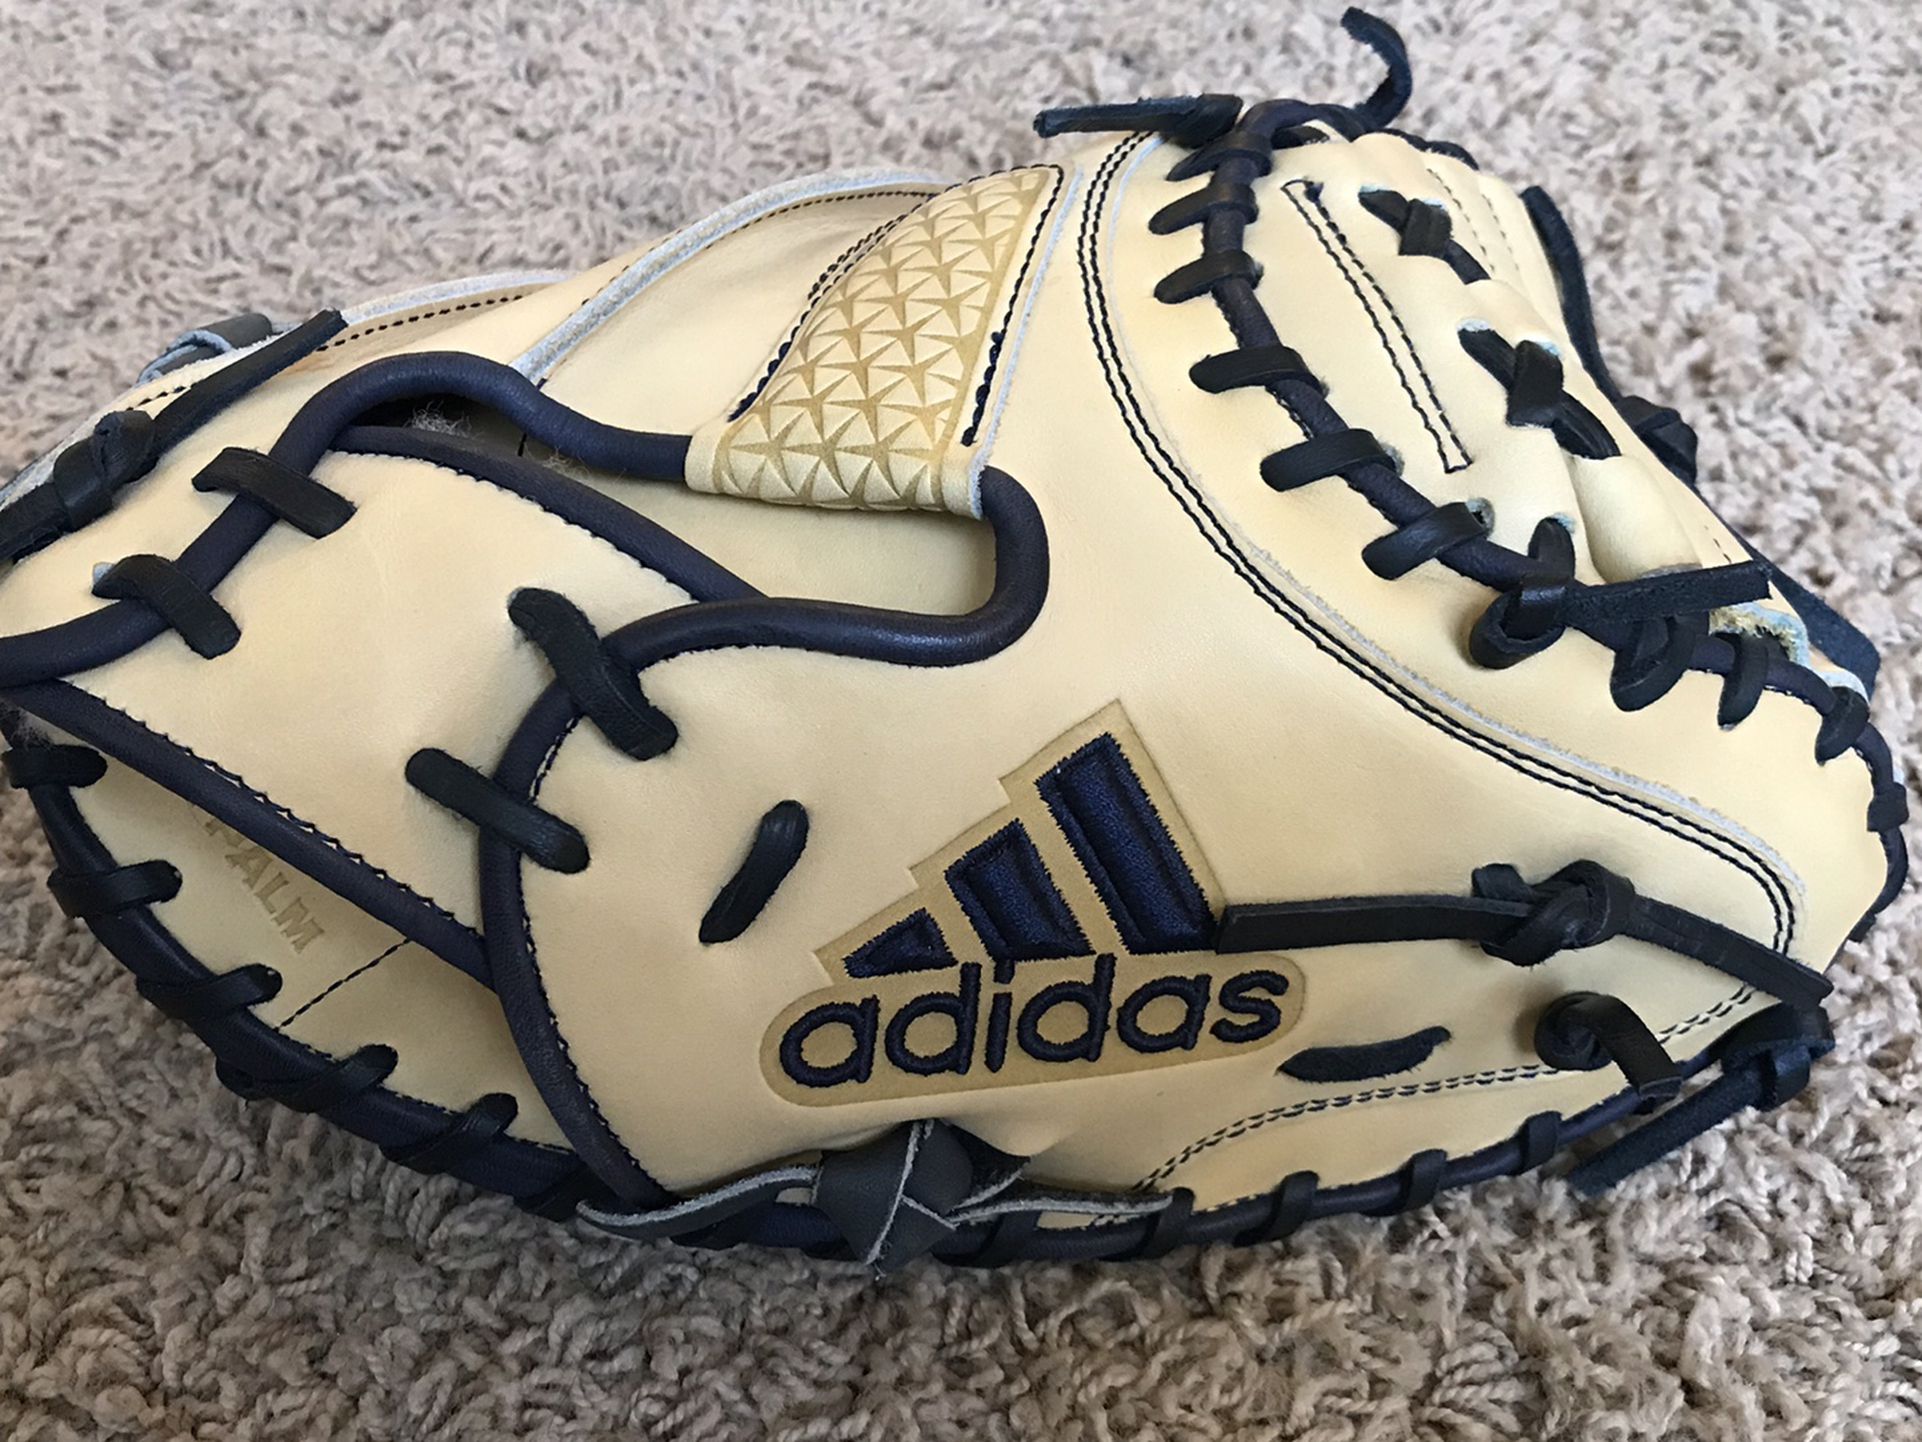 Adidas EQT 33.5” Catcher’s Glove